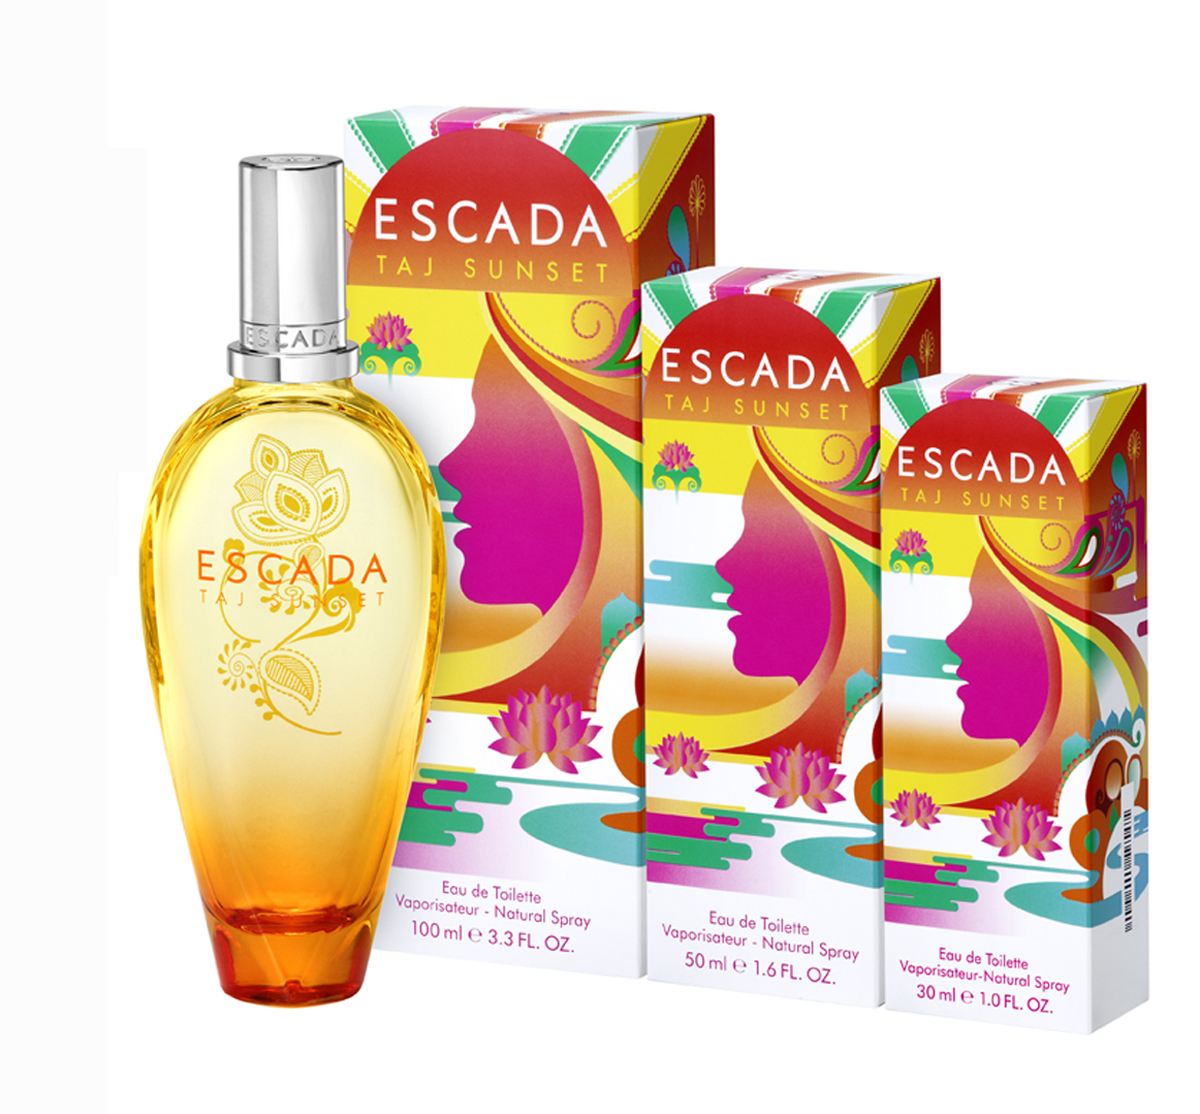 Escada Ocean Lounge Eau de Toilette Reviews - Perfumes | dooyoo